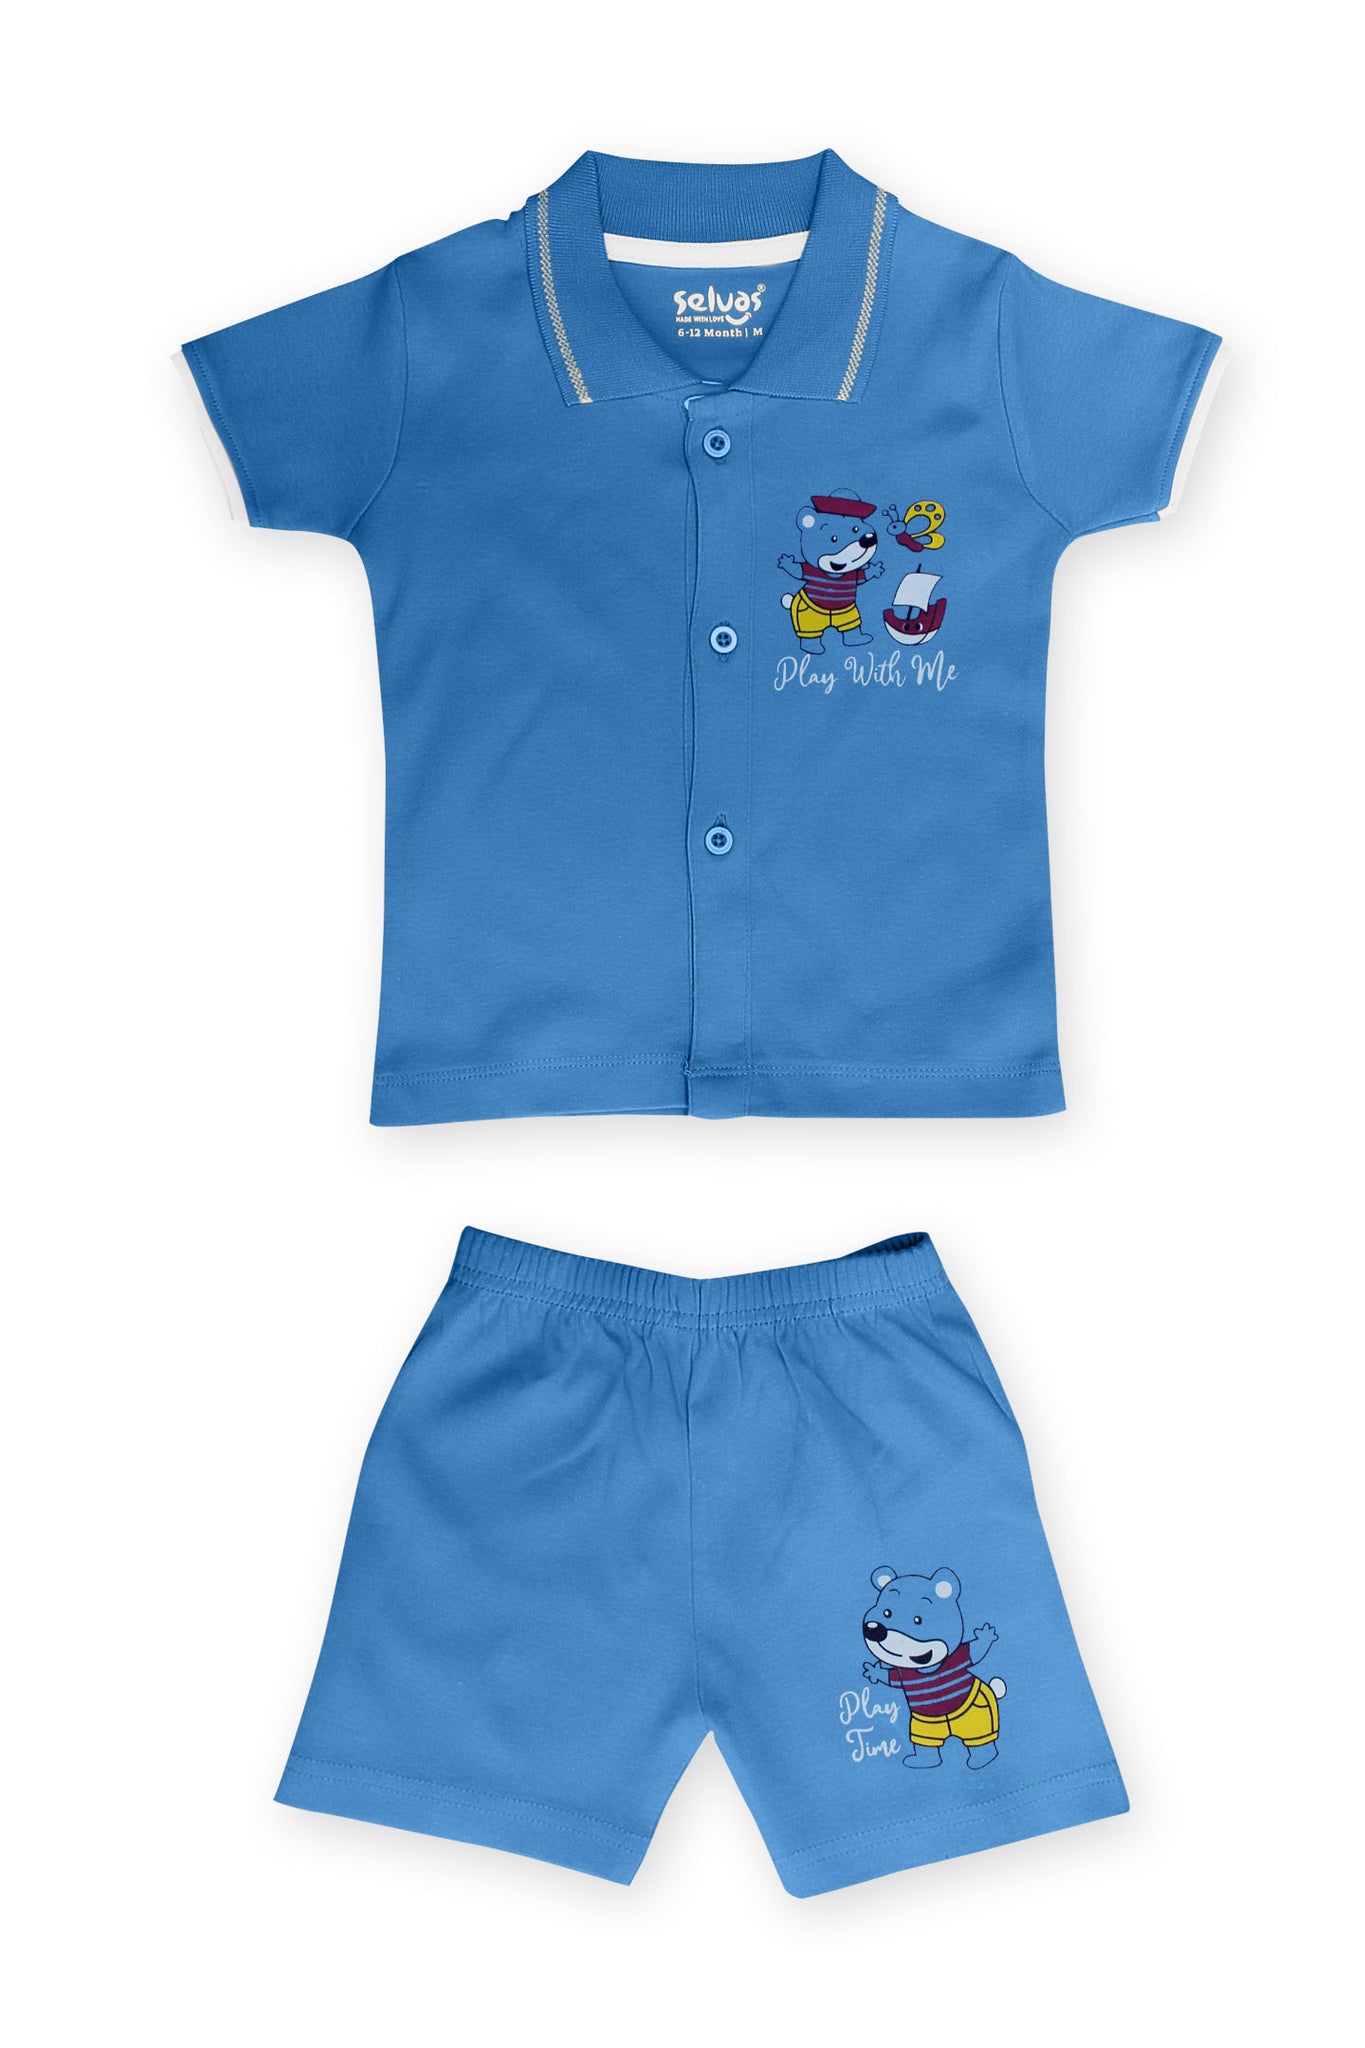 Selvas Infants Unisex Half Sleeve Front Open Collar Top With Shorts 909